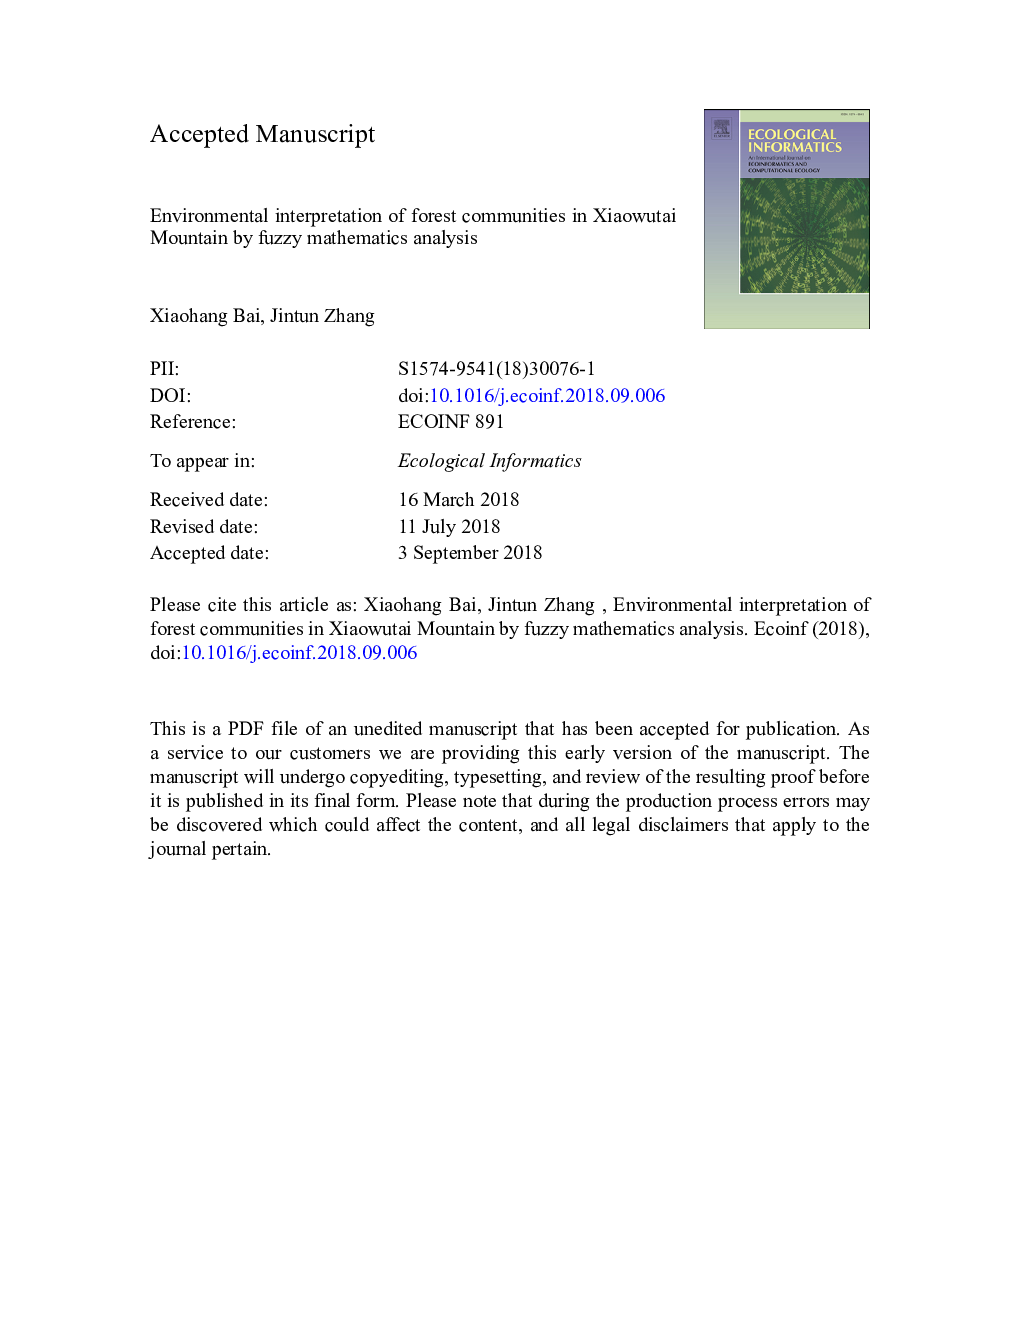 Environmental interpretation of forest communities in Xiaowutai Mountain by fuzzy mathematics analysis